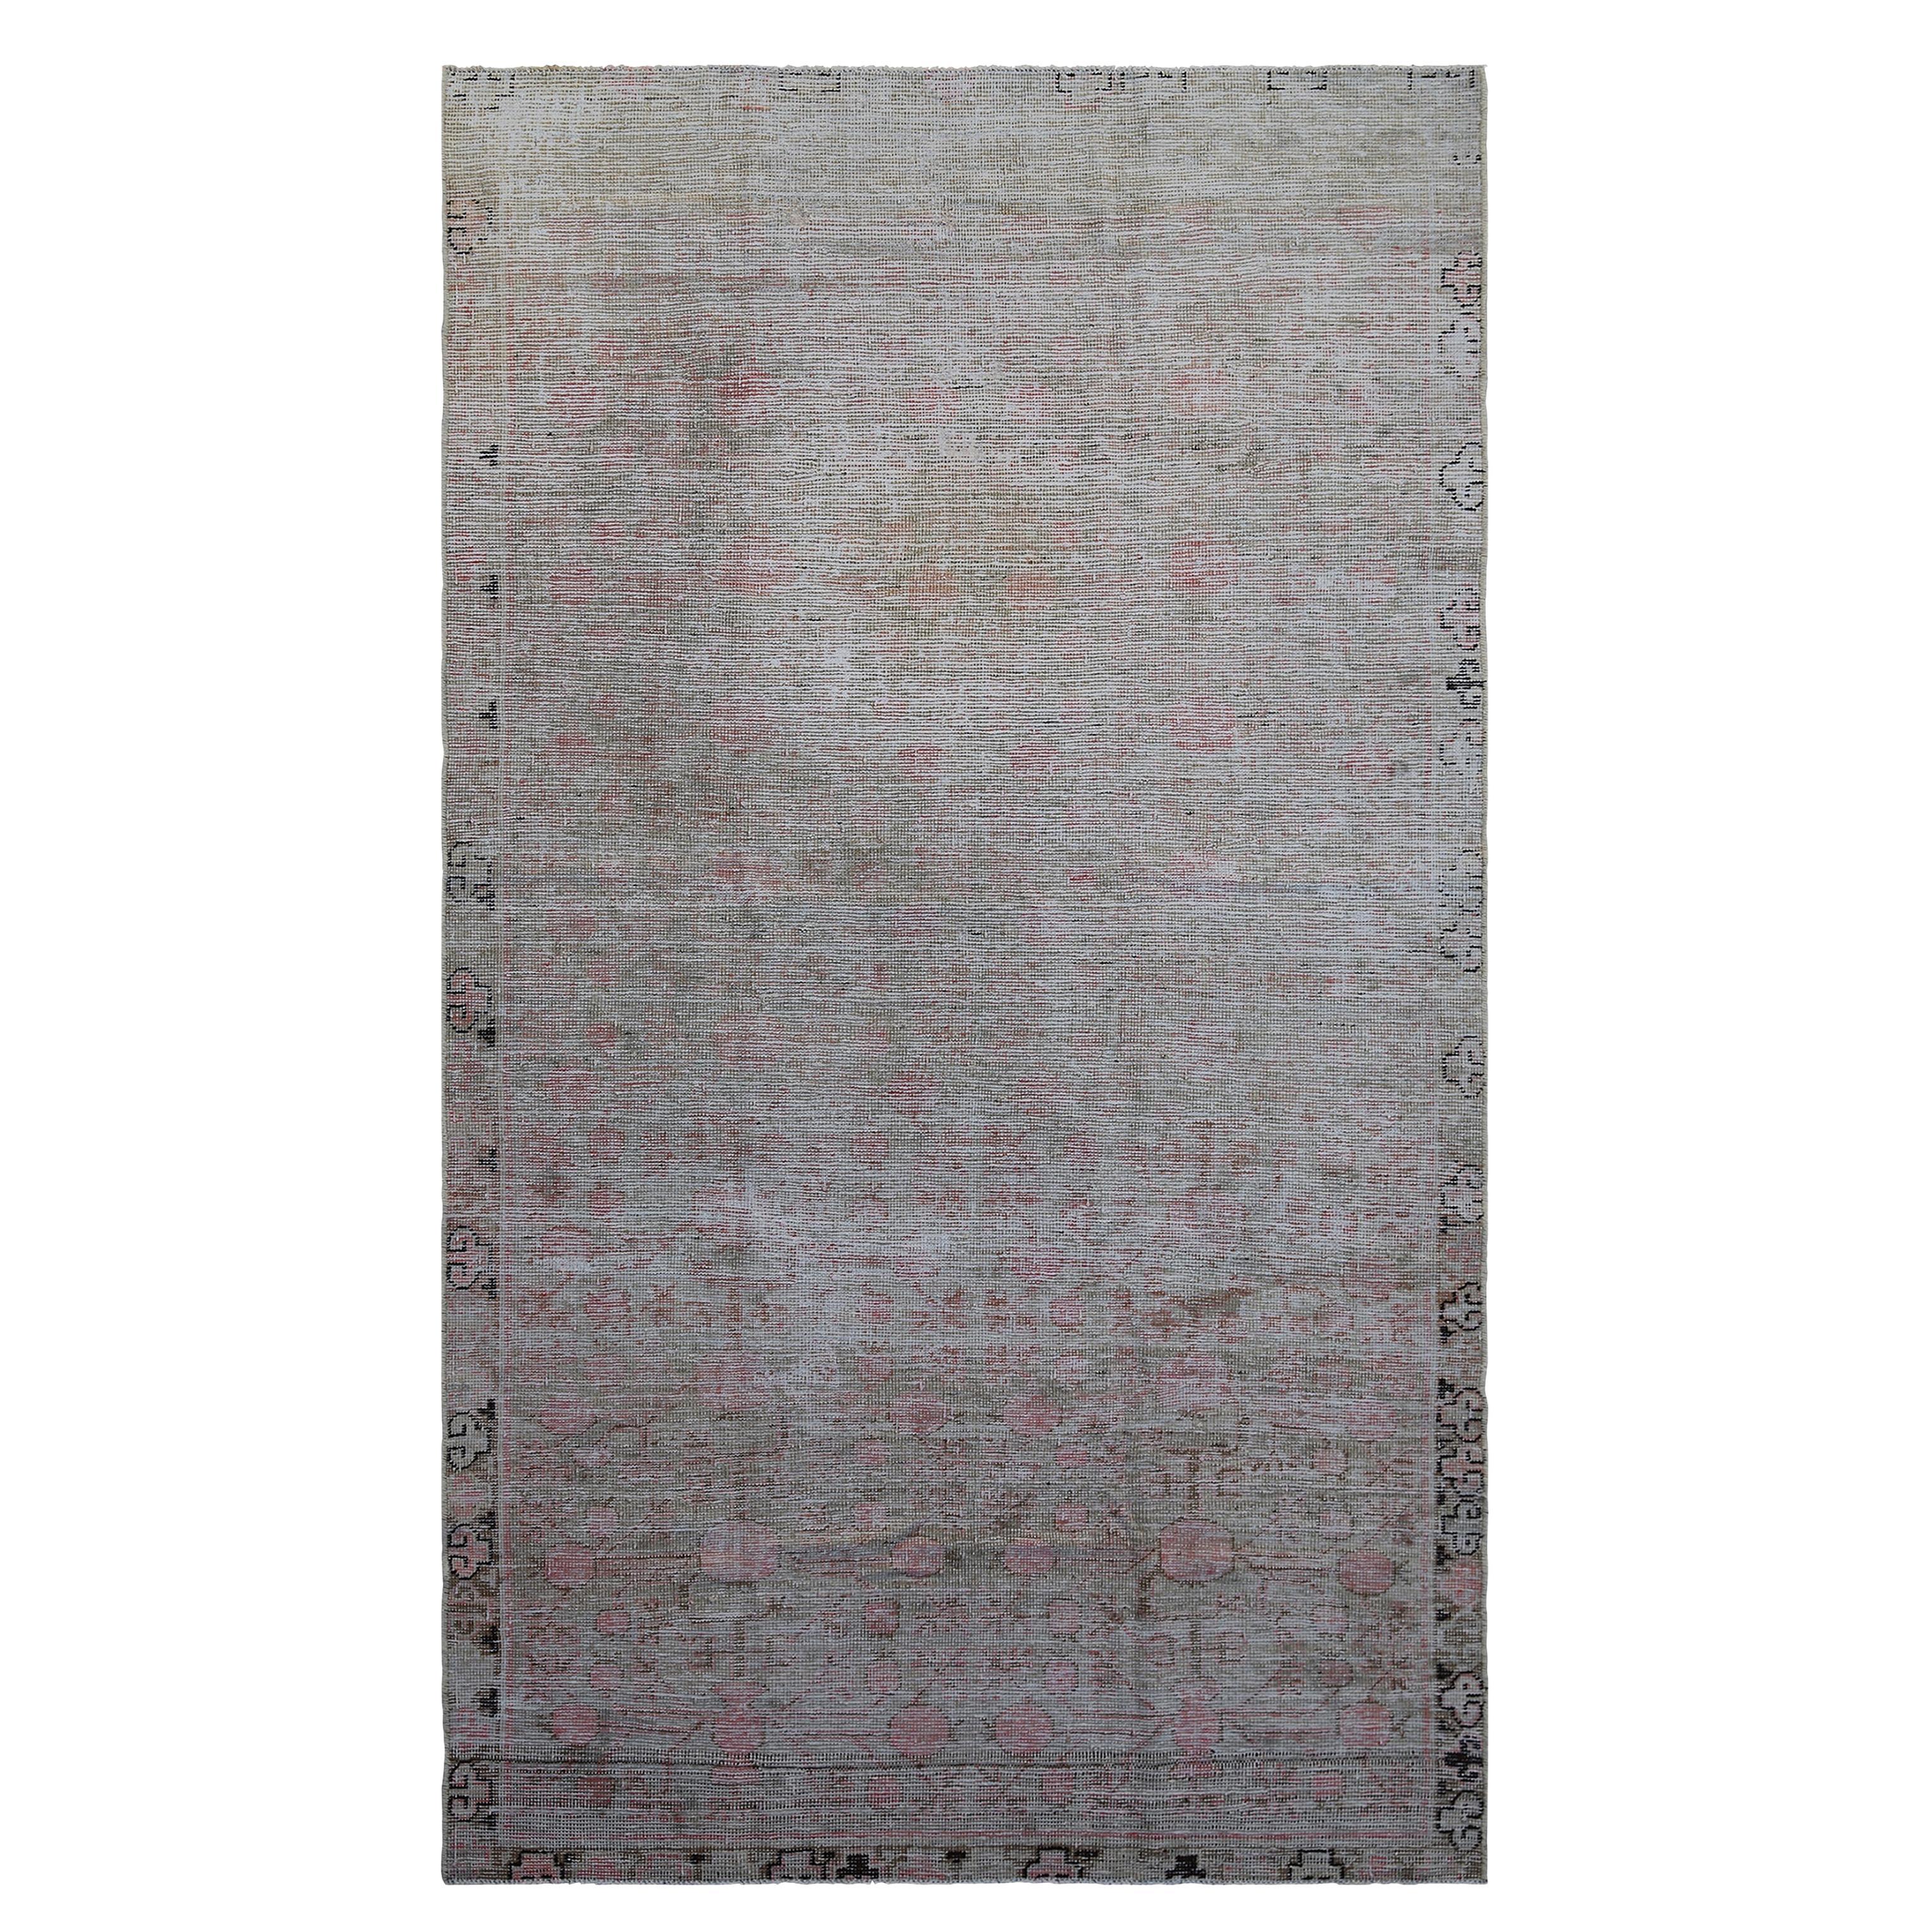 abc carpet Multicolored Vintage Wool Cotton Blend Rug - 4' x 7'2" For Sale